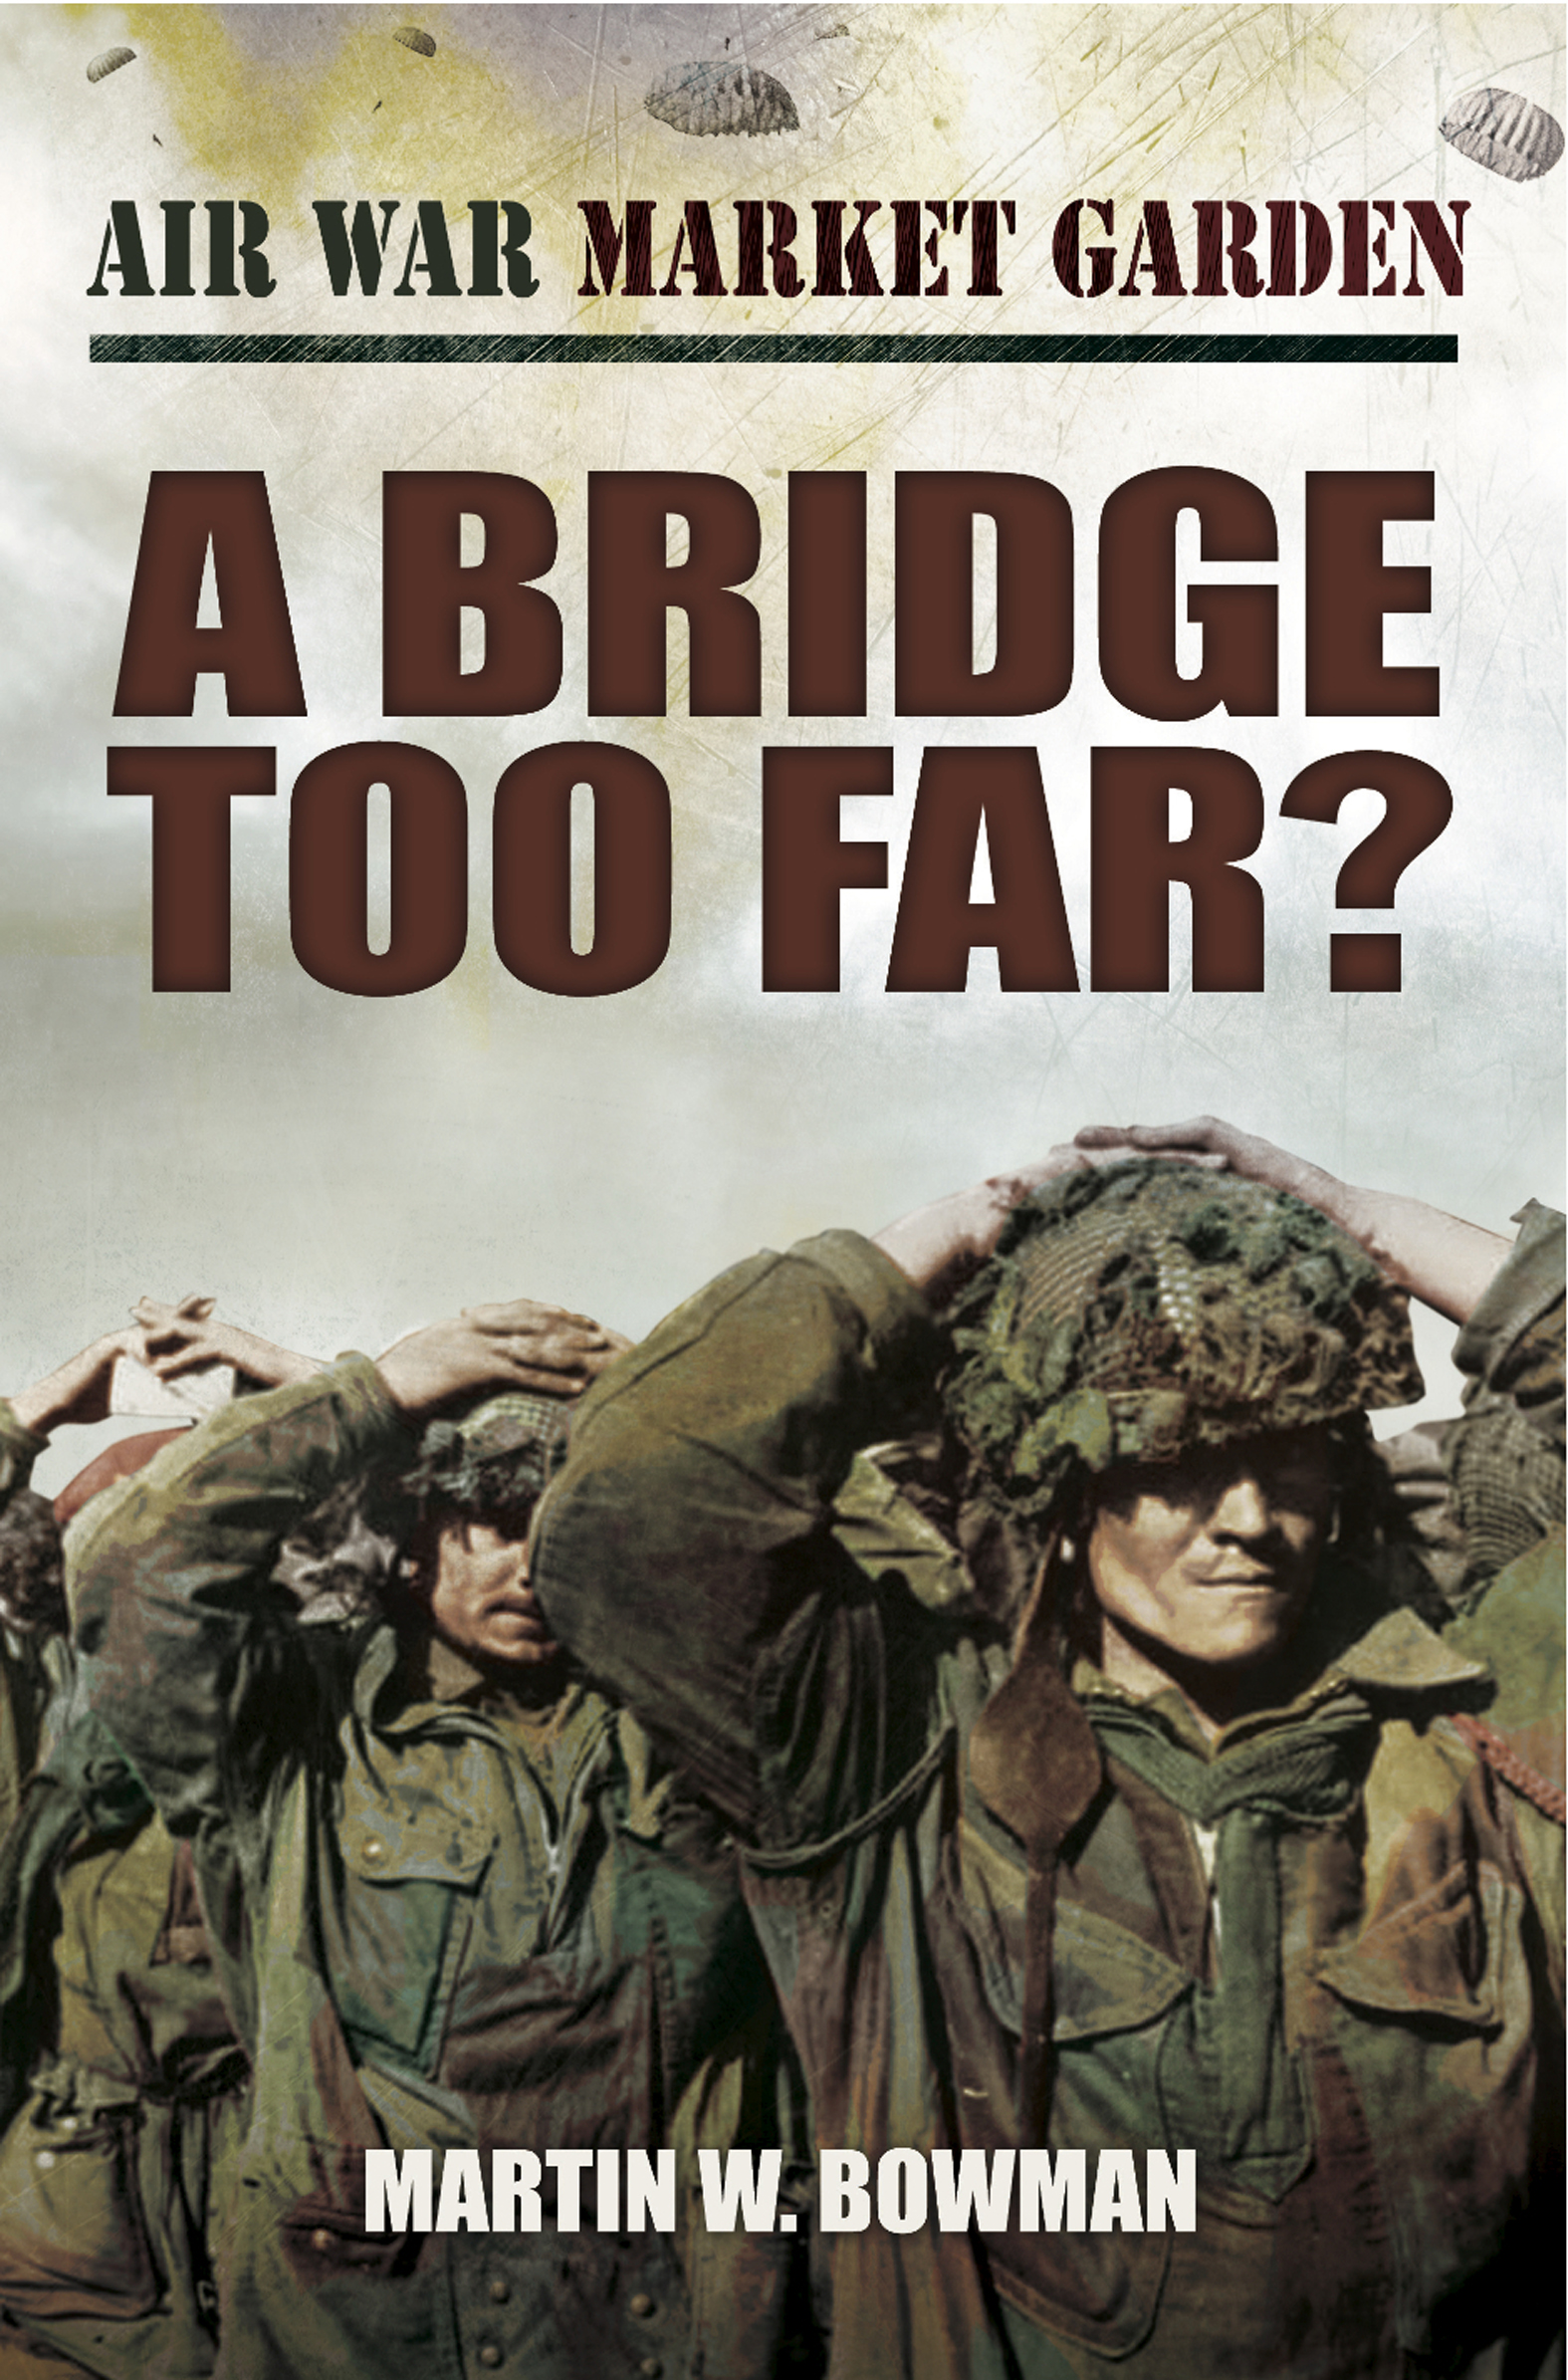 A Bridge Too Far?